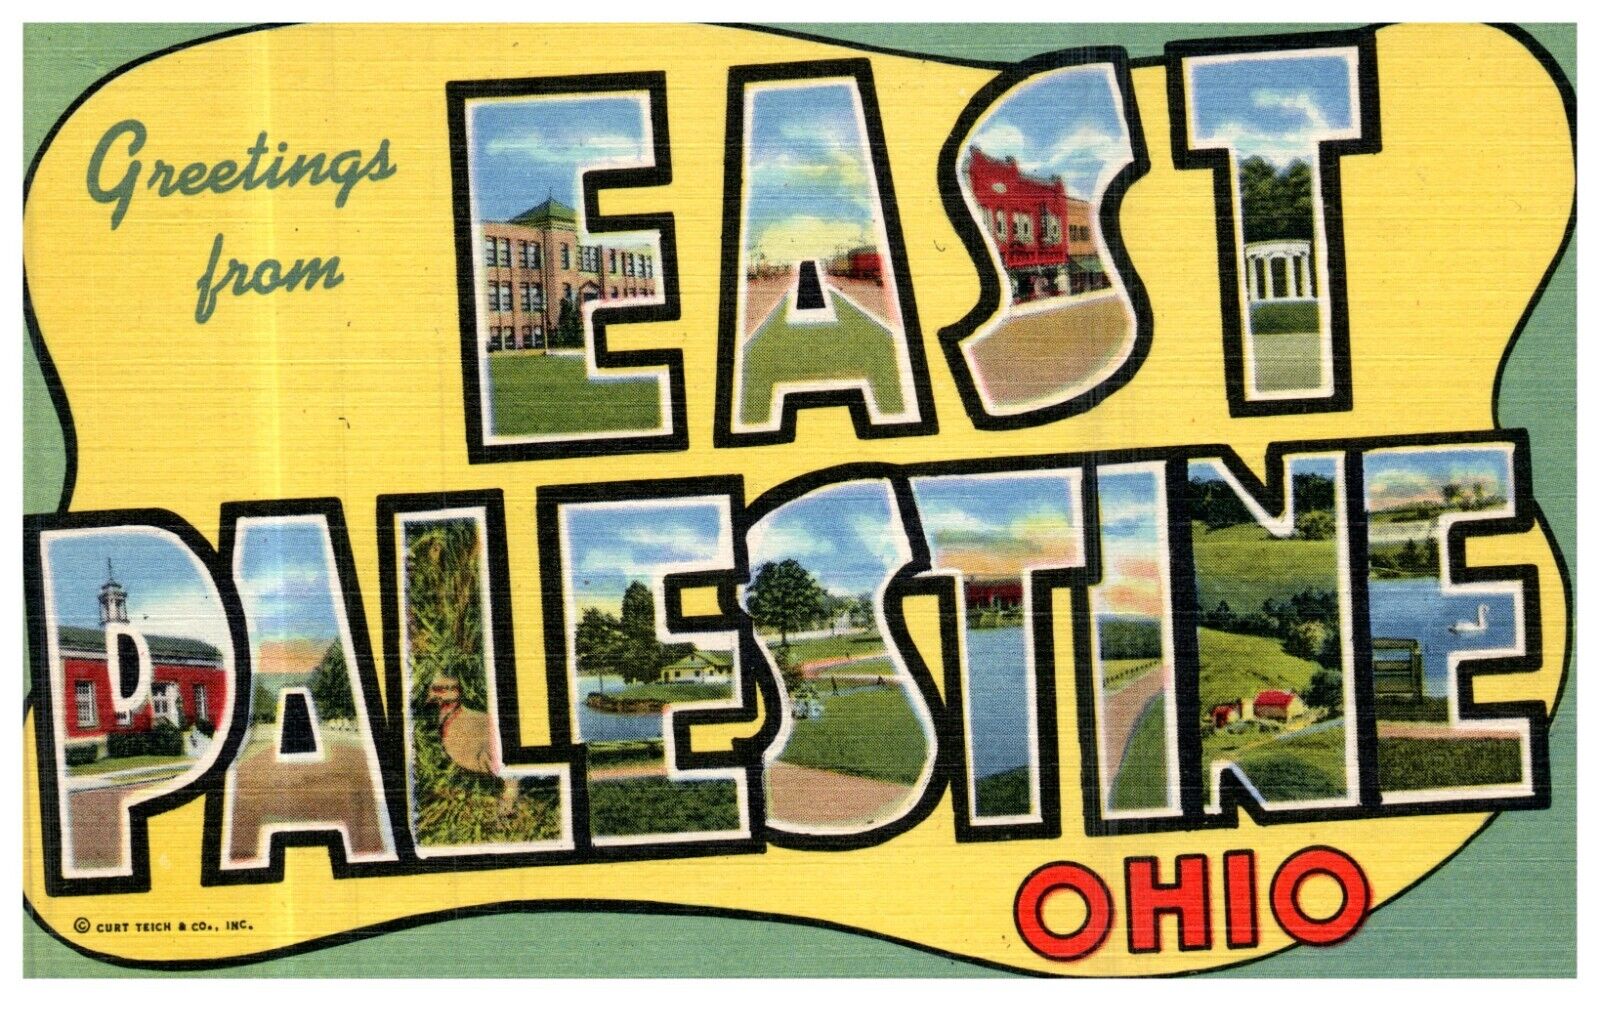 East Palestine Ohio OH Large Letter Greeting 1953 Vintage Linen Postcard-N2-23